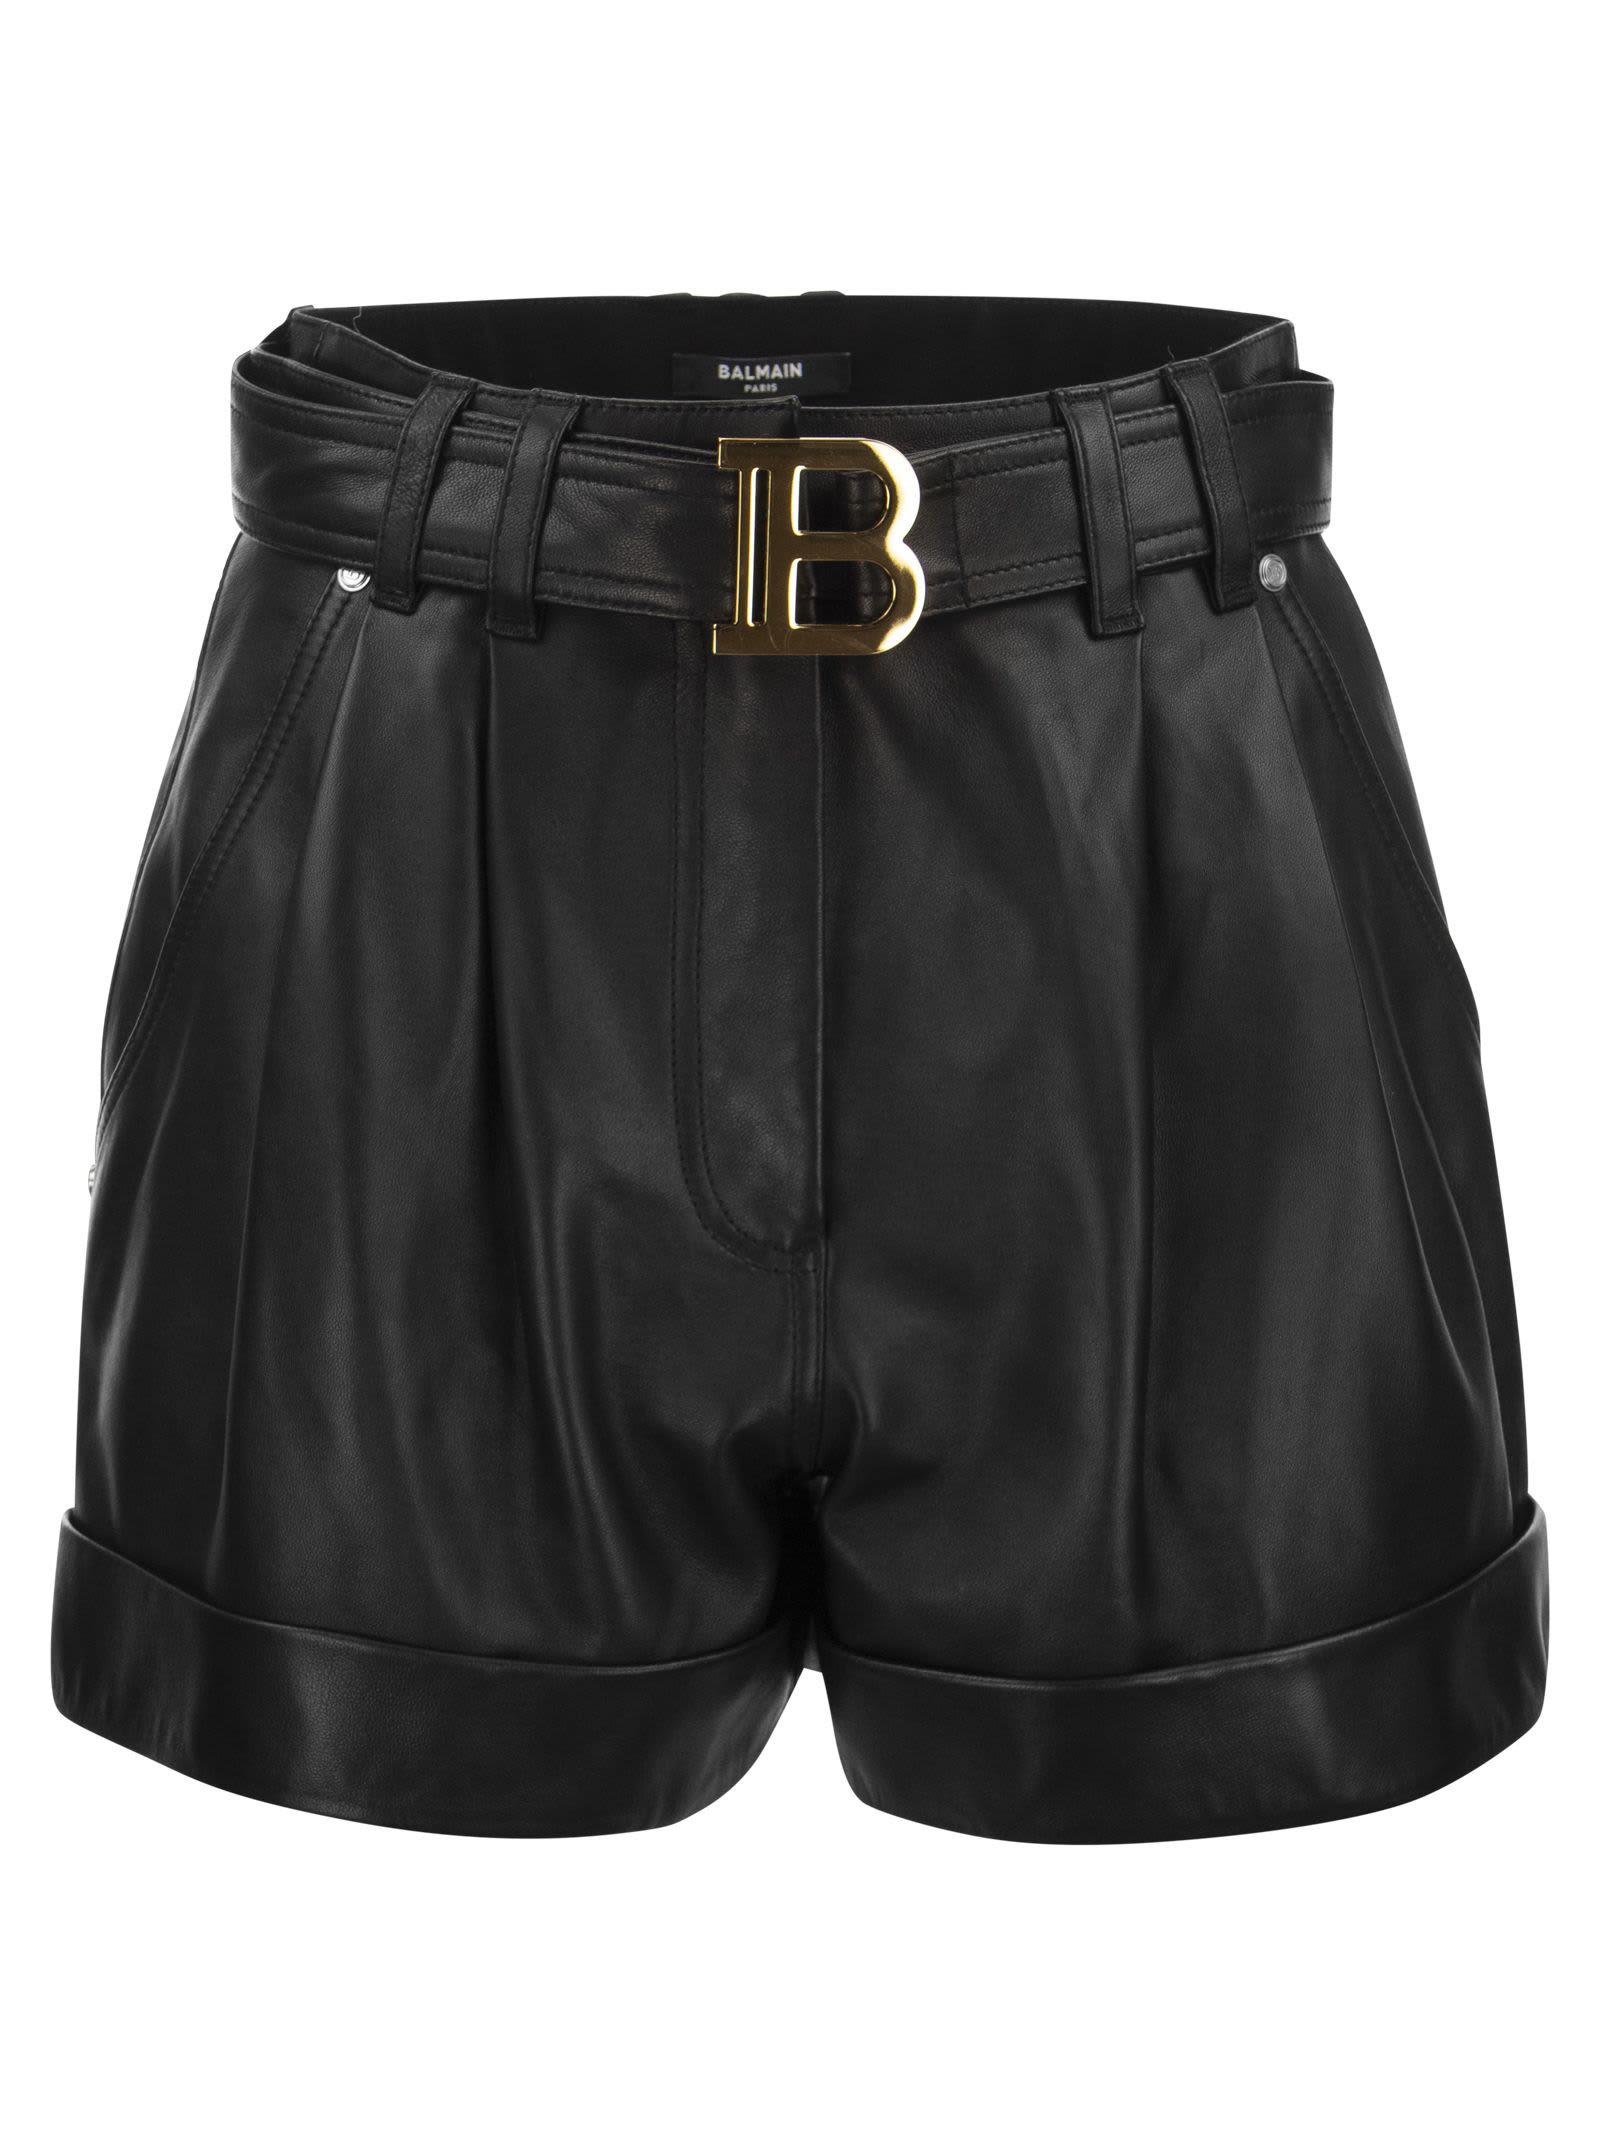 Balmain Leather Shorts With Belt